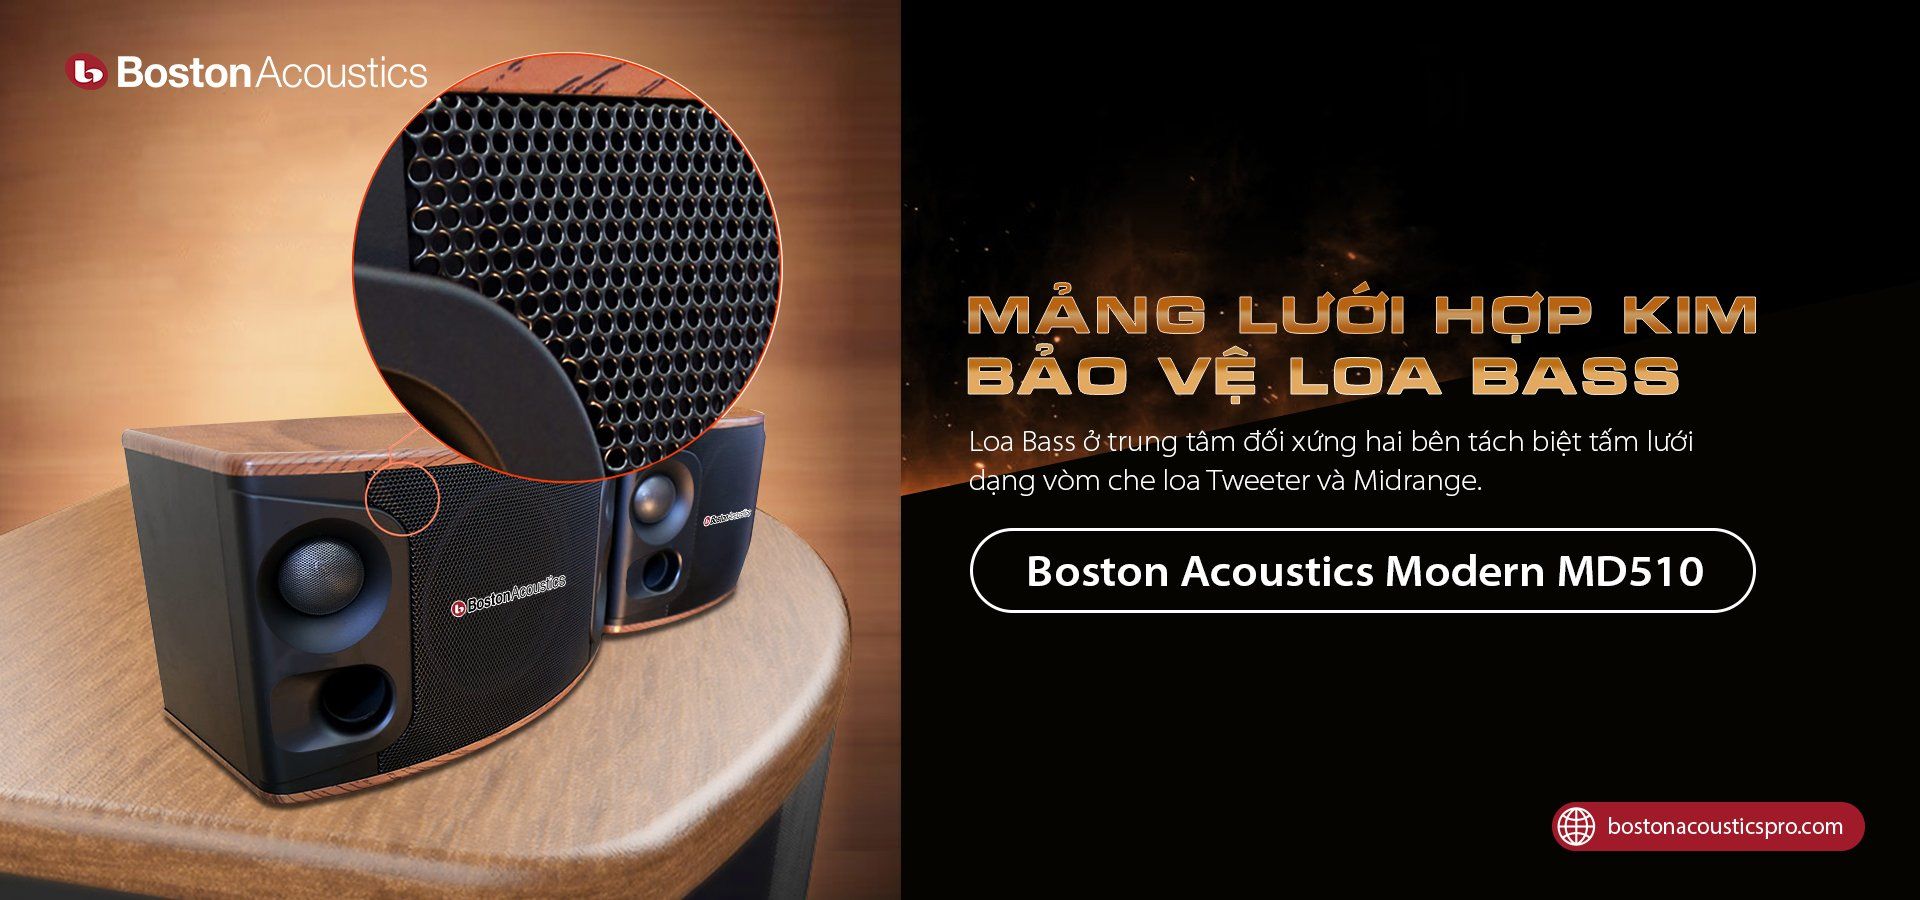 Boston Acoustics MD510